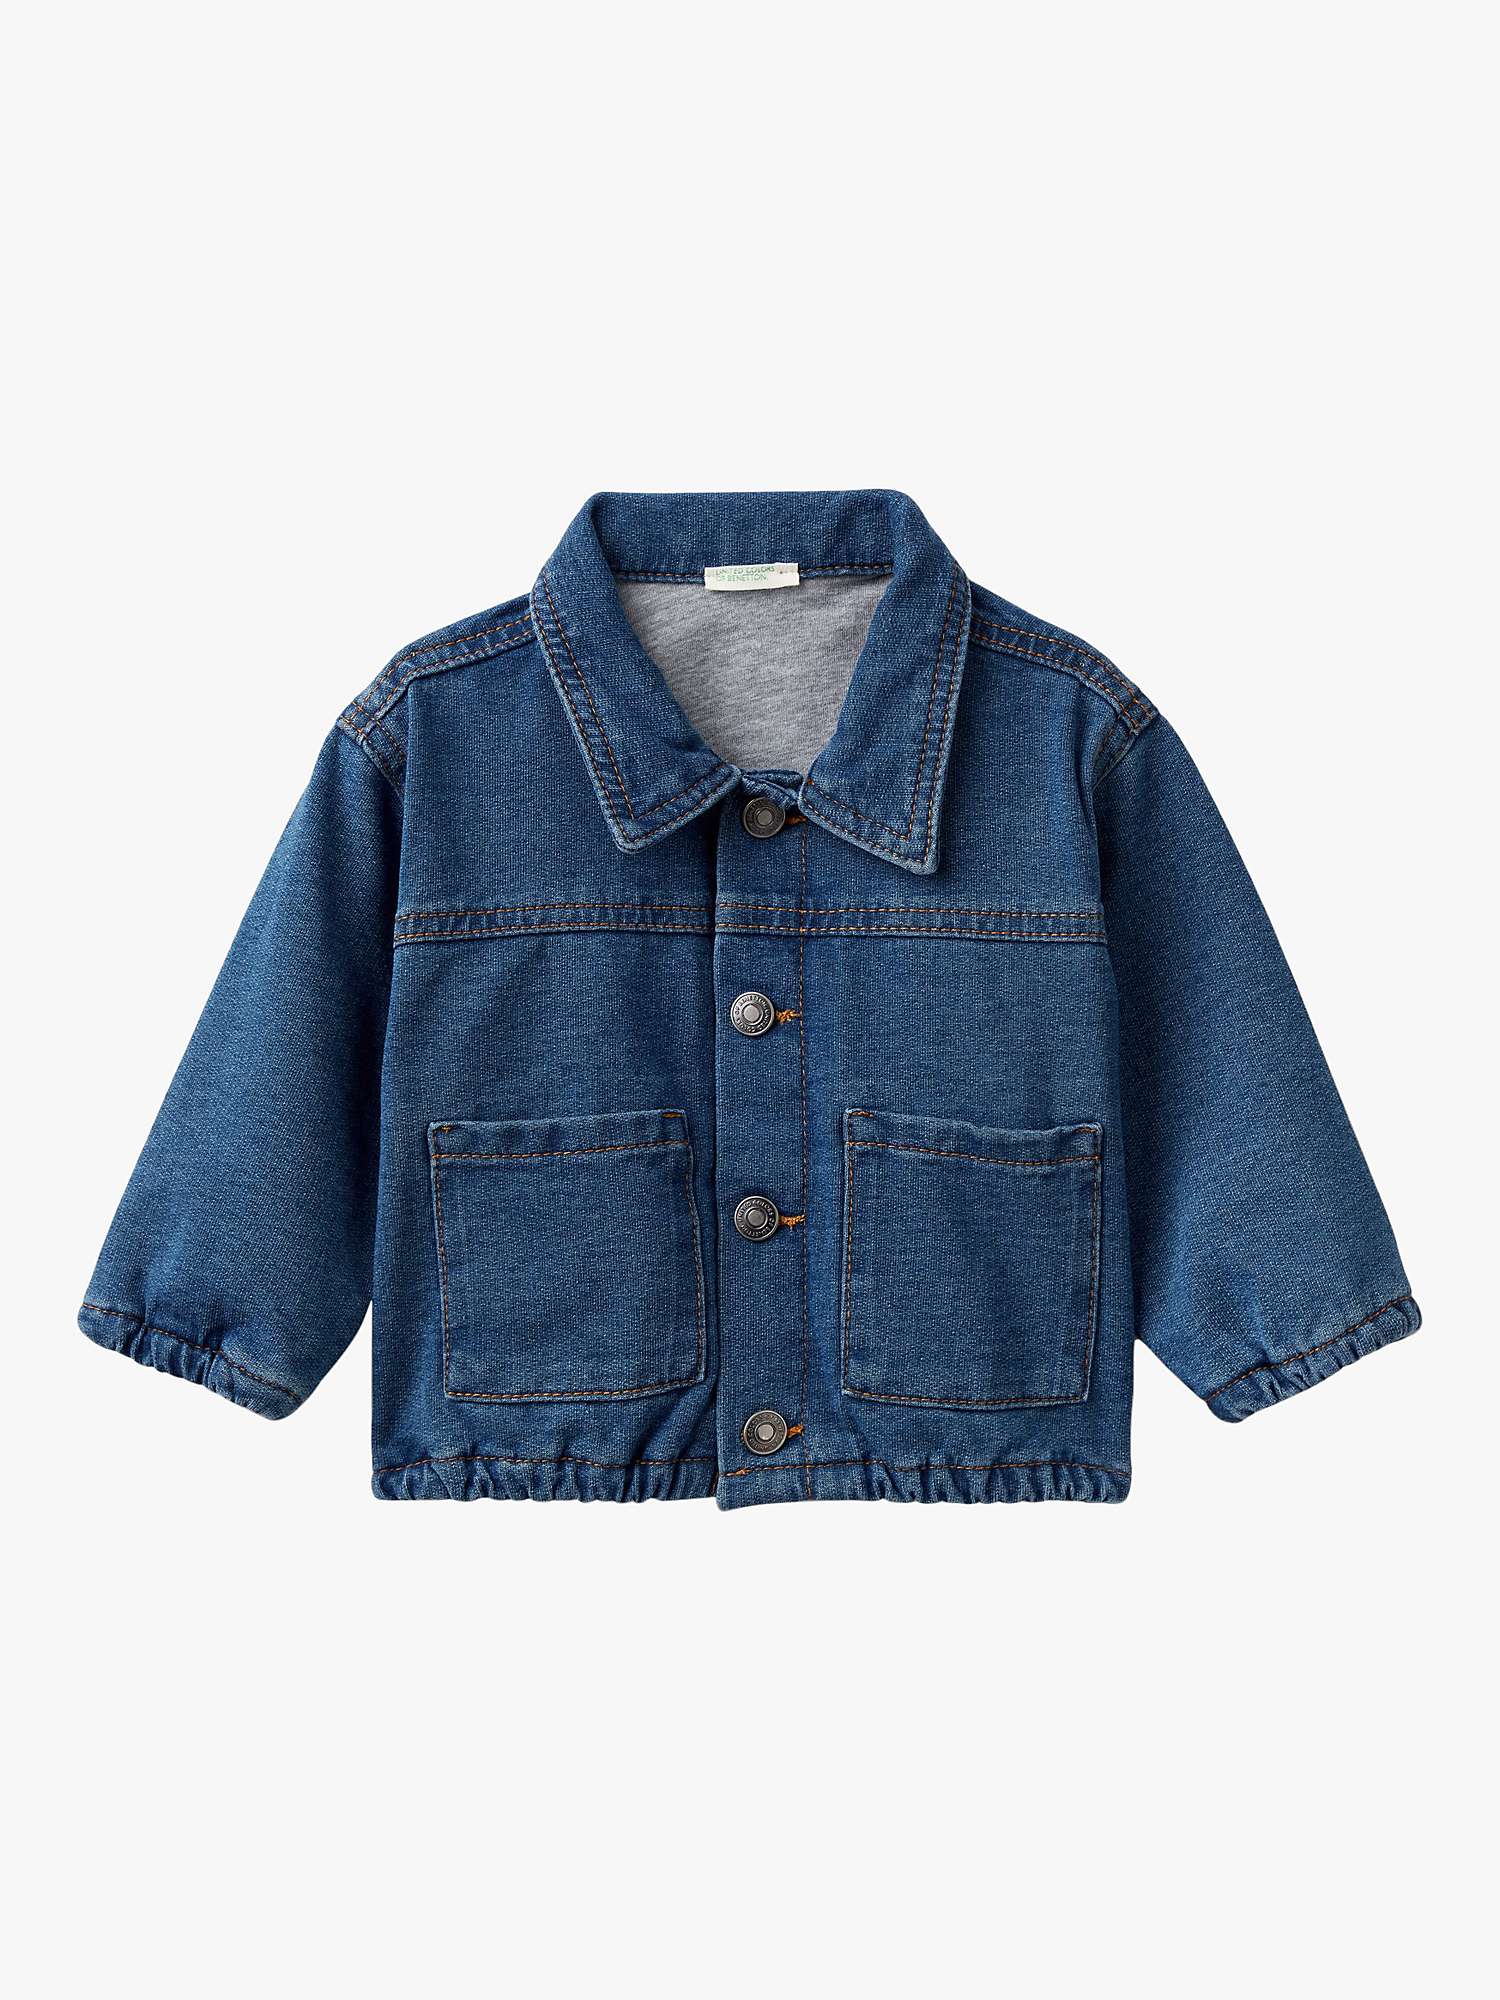 Buy Benetton Baby Denim Jacket, Blue Online at johnlewis.com